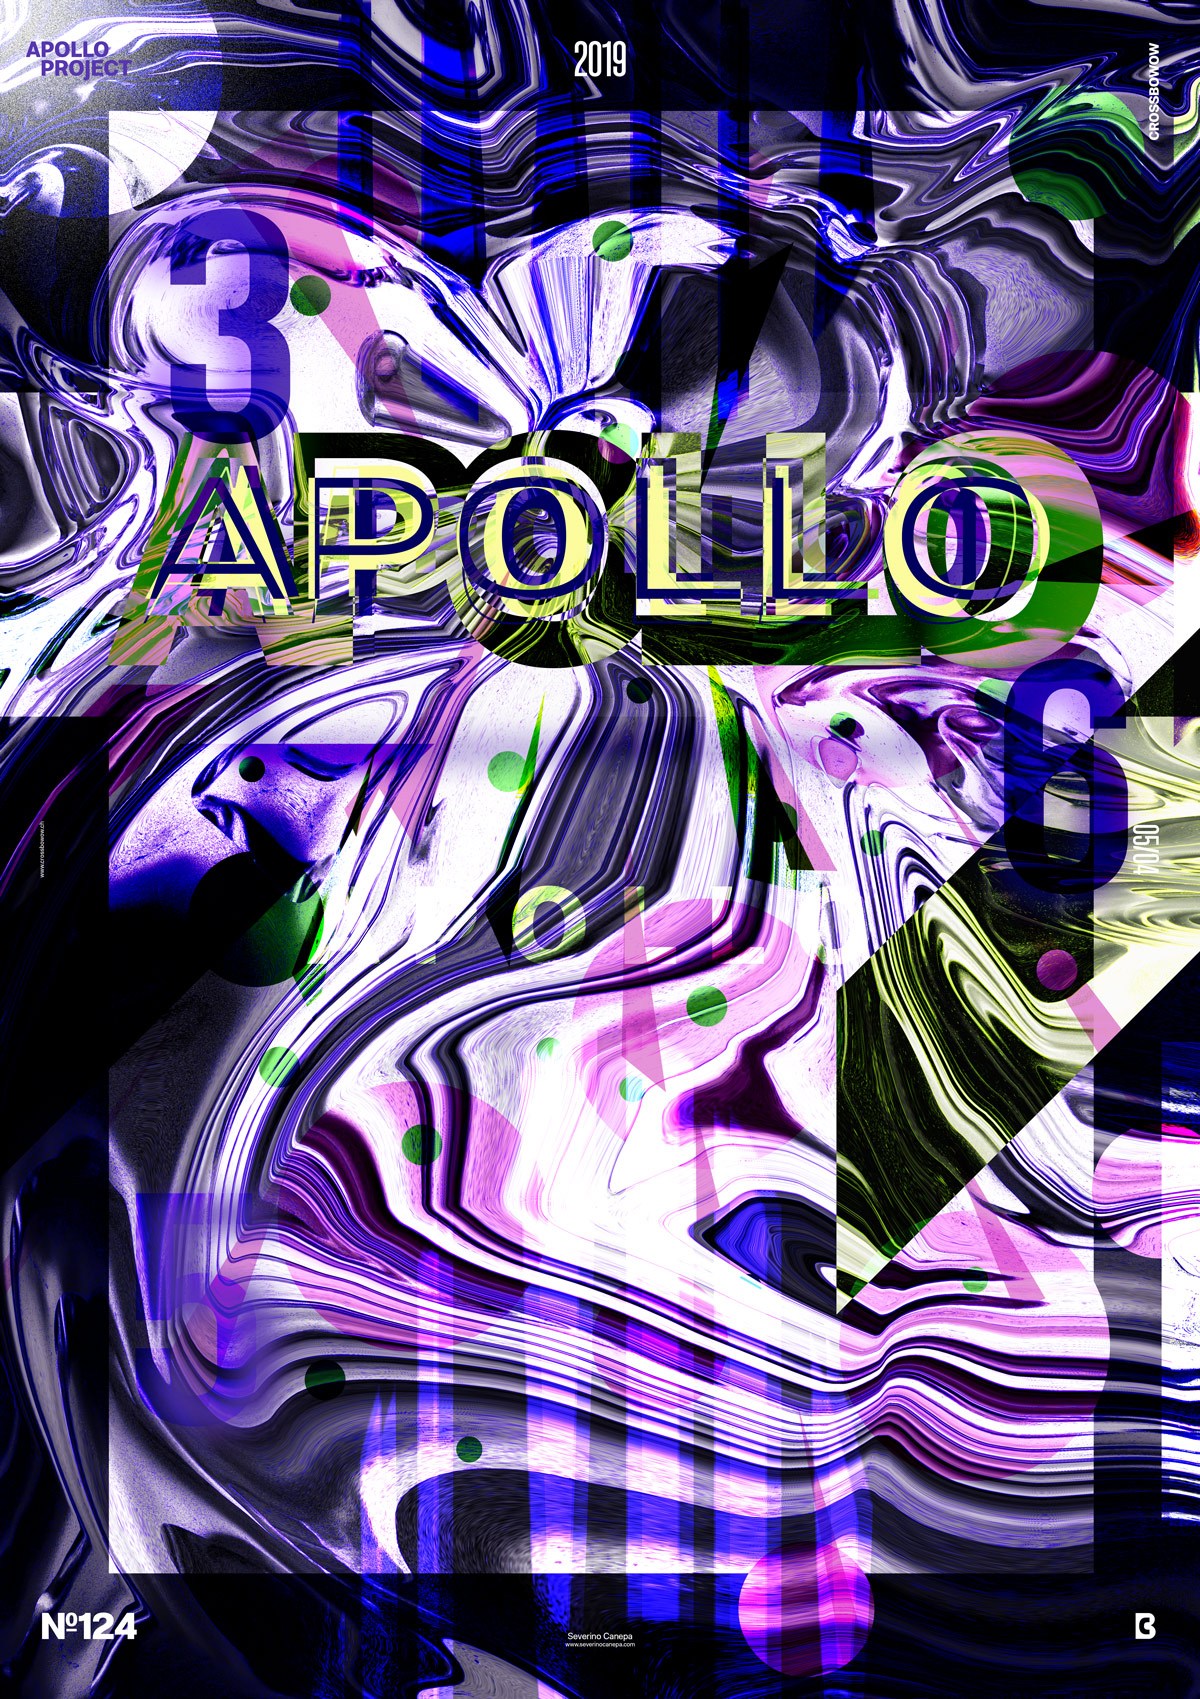 Original and explosive poster creation #124 Apollo's Psyche